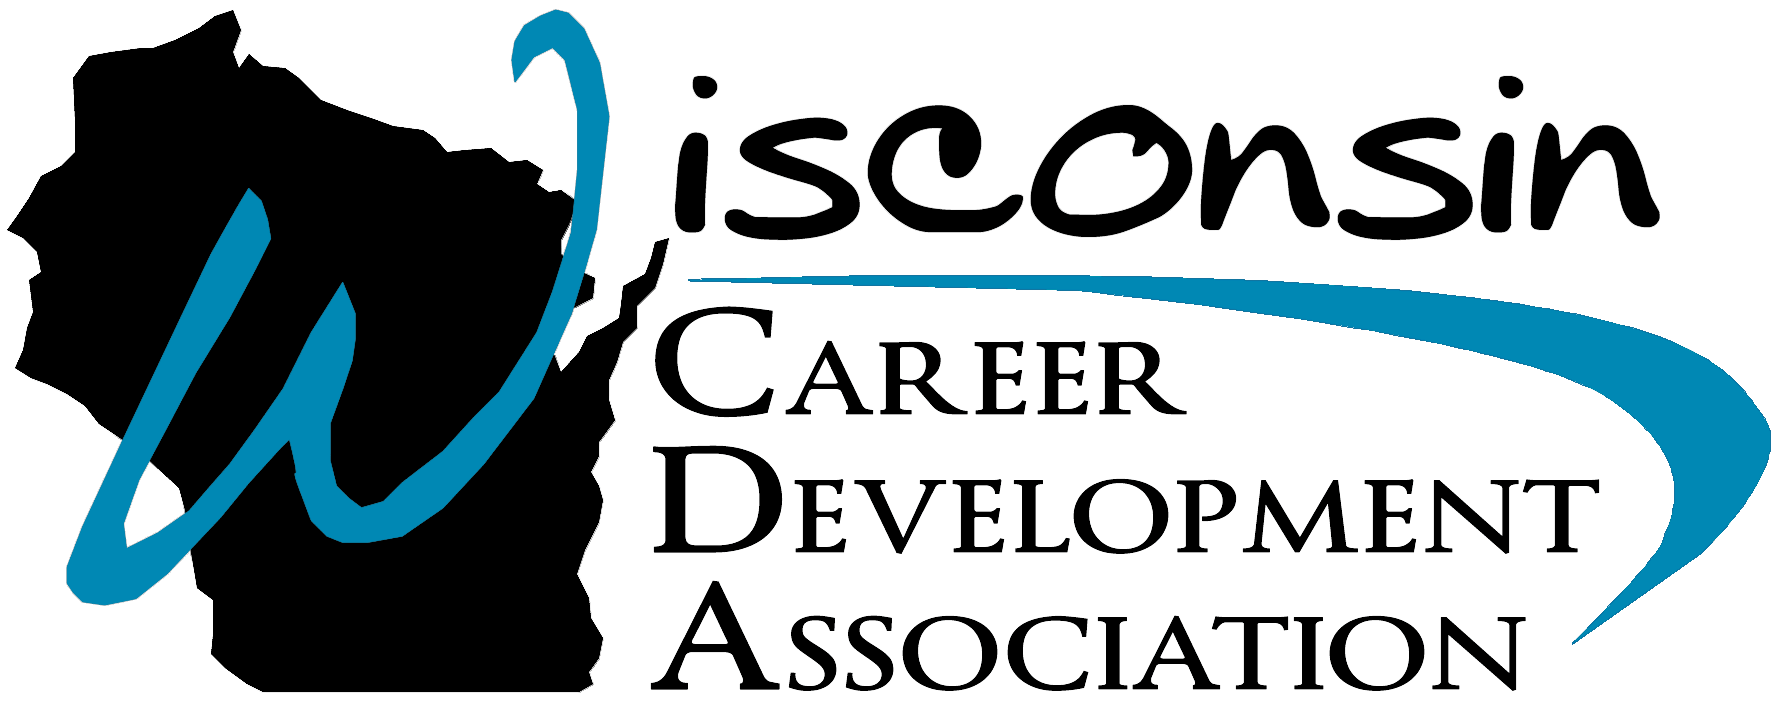 Wisconsin Career Development Association - Join/Renew